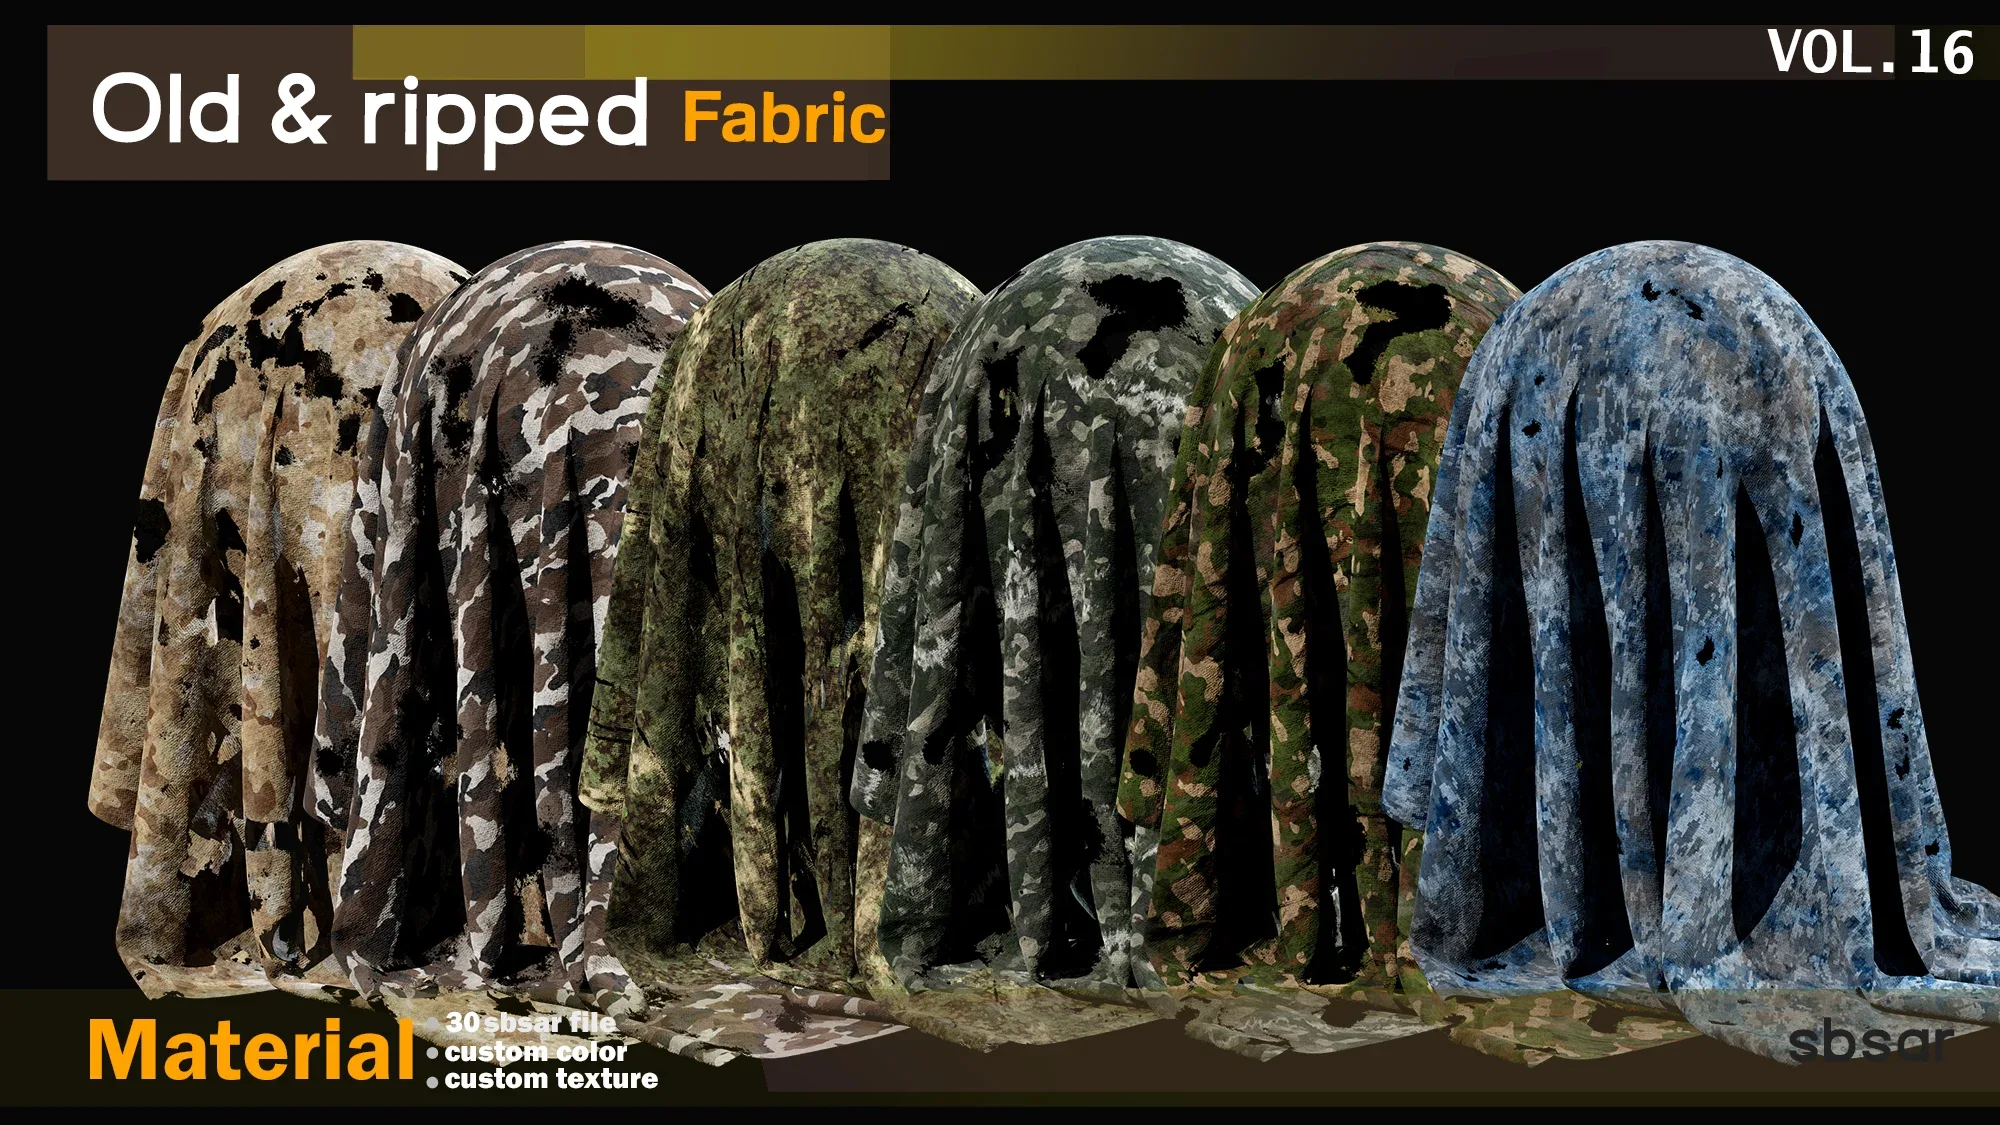 procedural old & ripped(torn) fabric Material -SBSAR -custom color -custom fabric -VOL 16